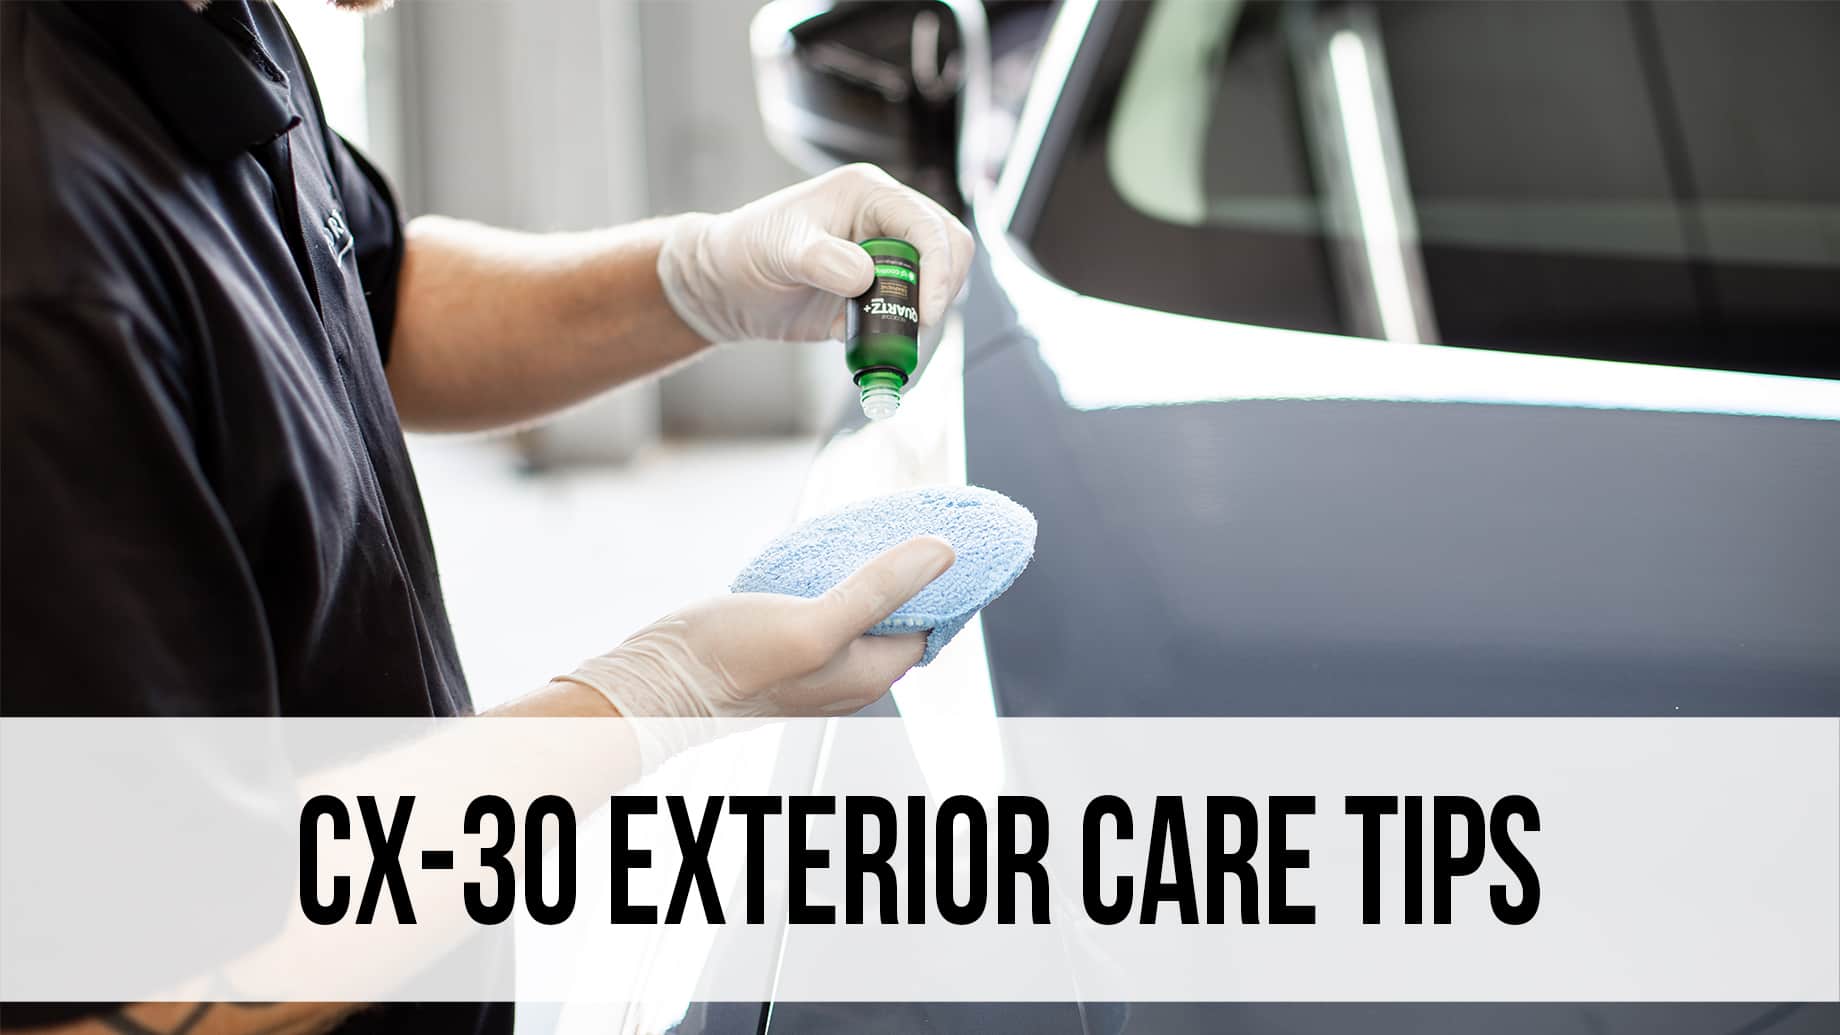 CX-30 Exterior Care Tips